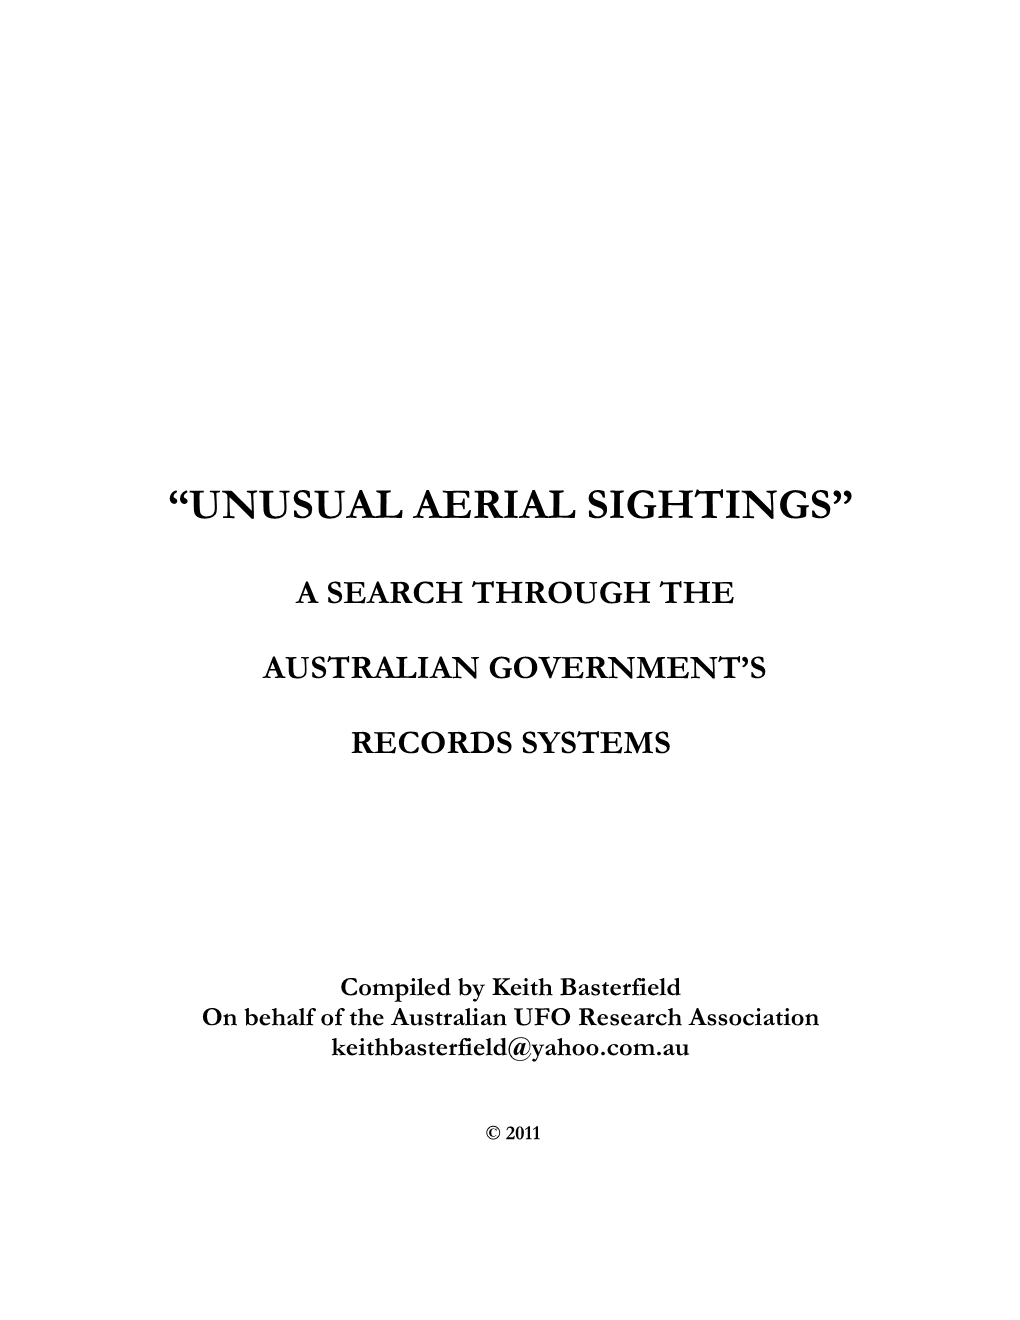 Ufo Files Located in the Australian Government